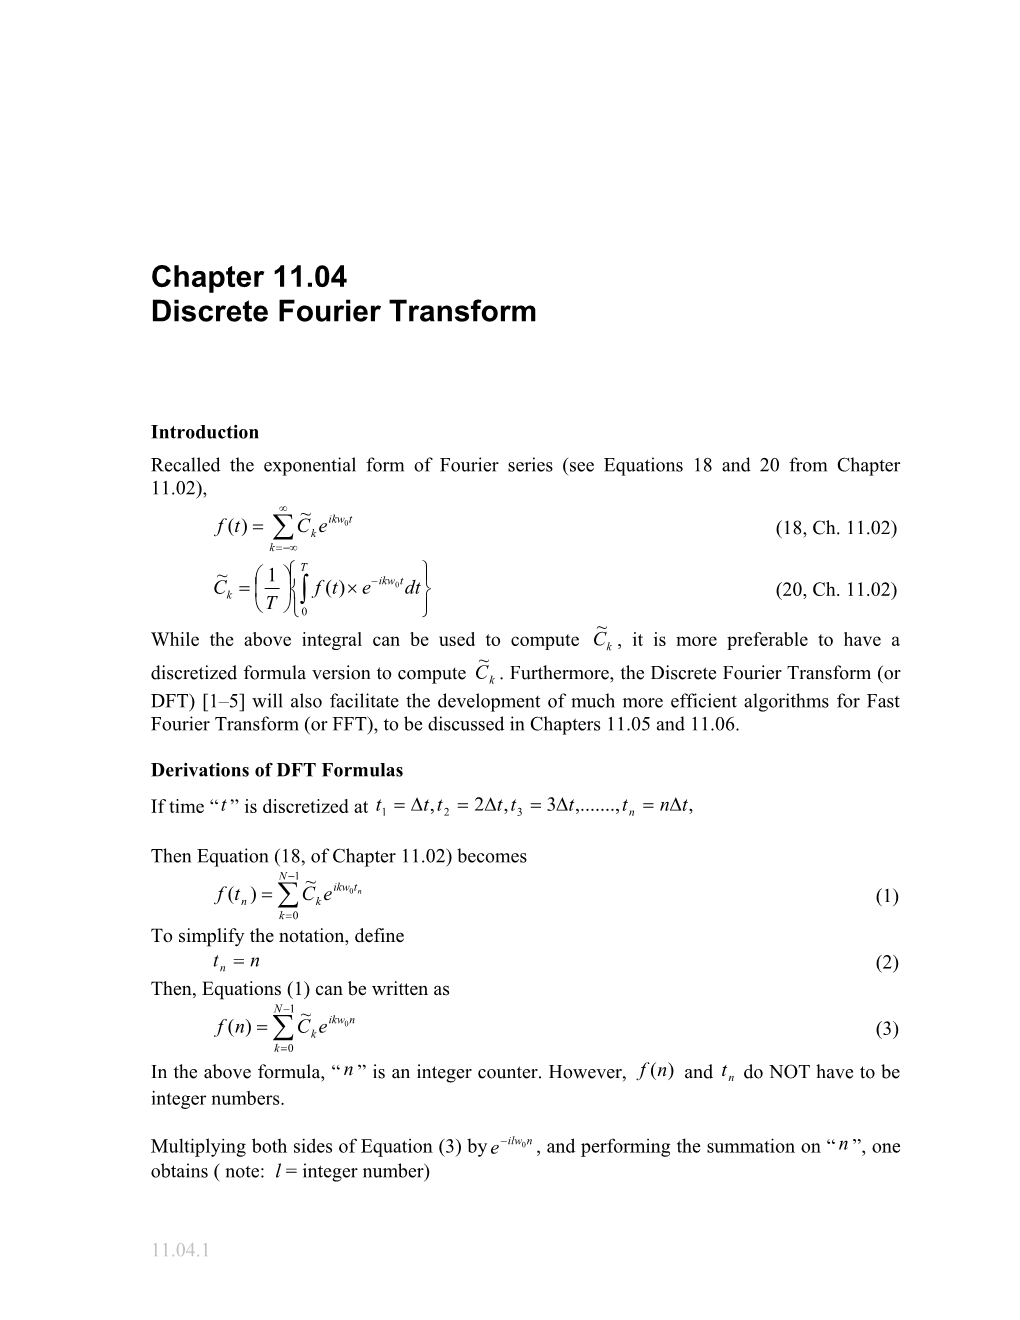 Textbook Notes on Discrete Fourier Transform